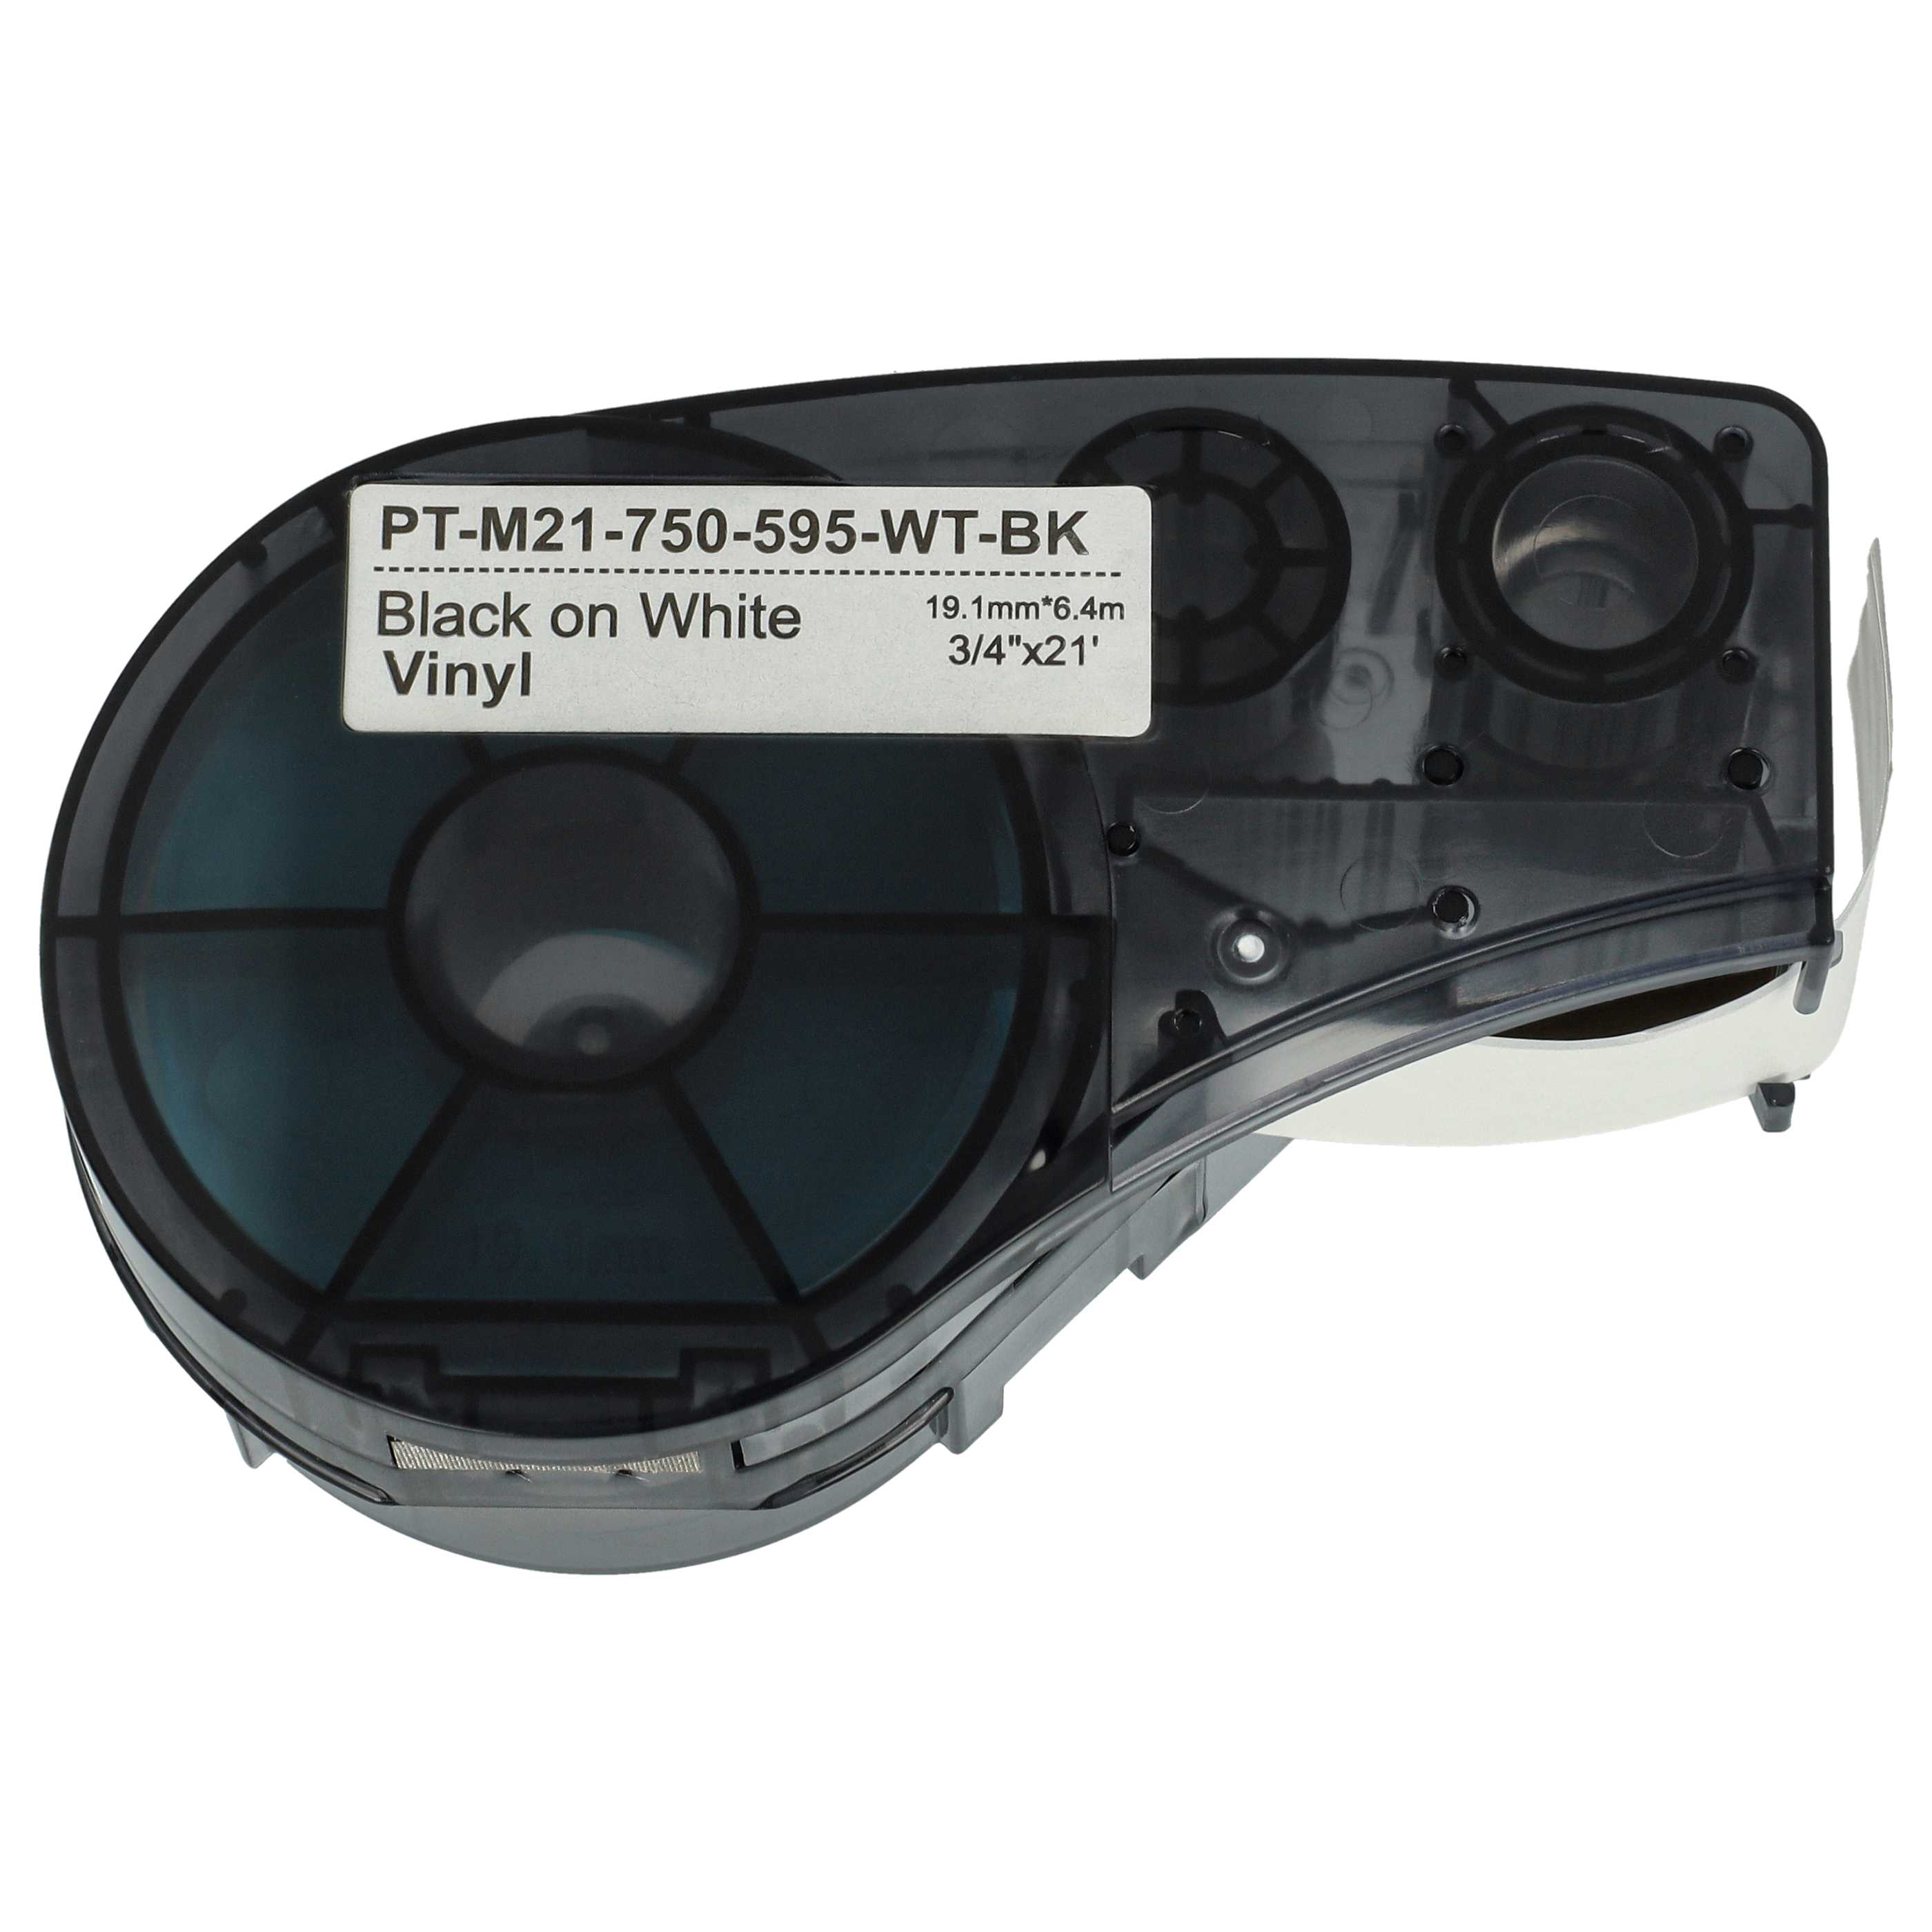 5x Casete cinta escritura reemplaza Brady M21-750-595-WT Negro su Blanco